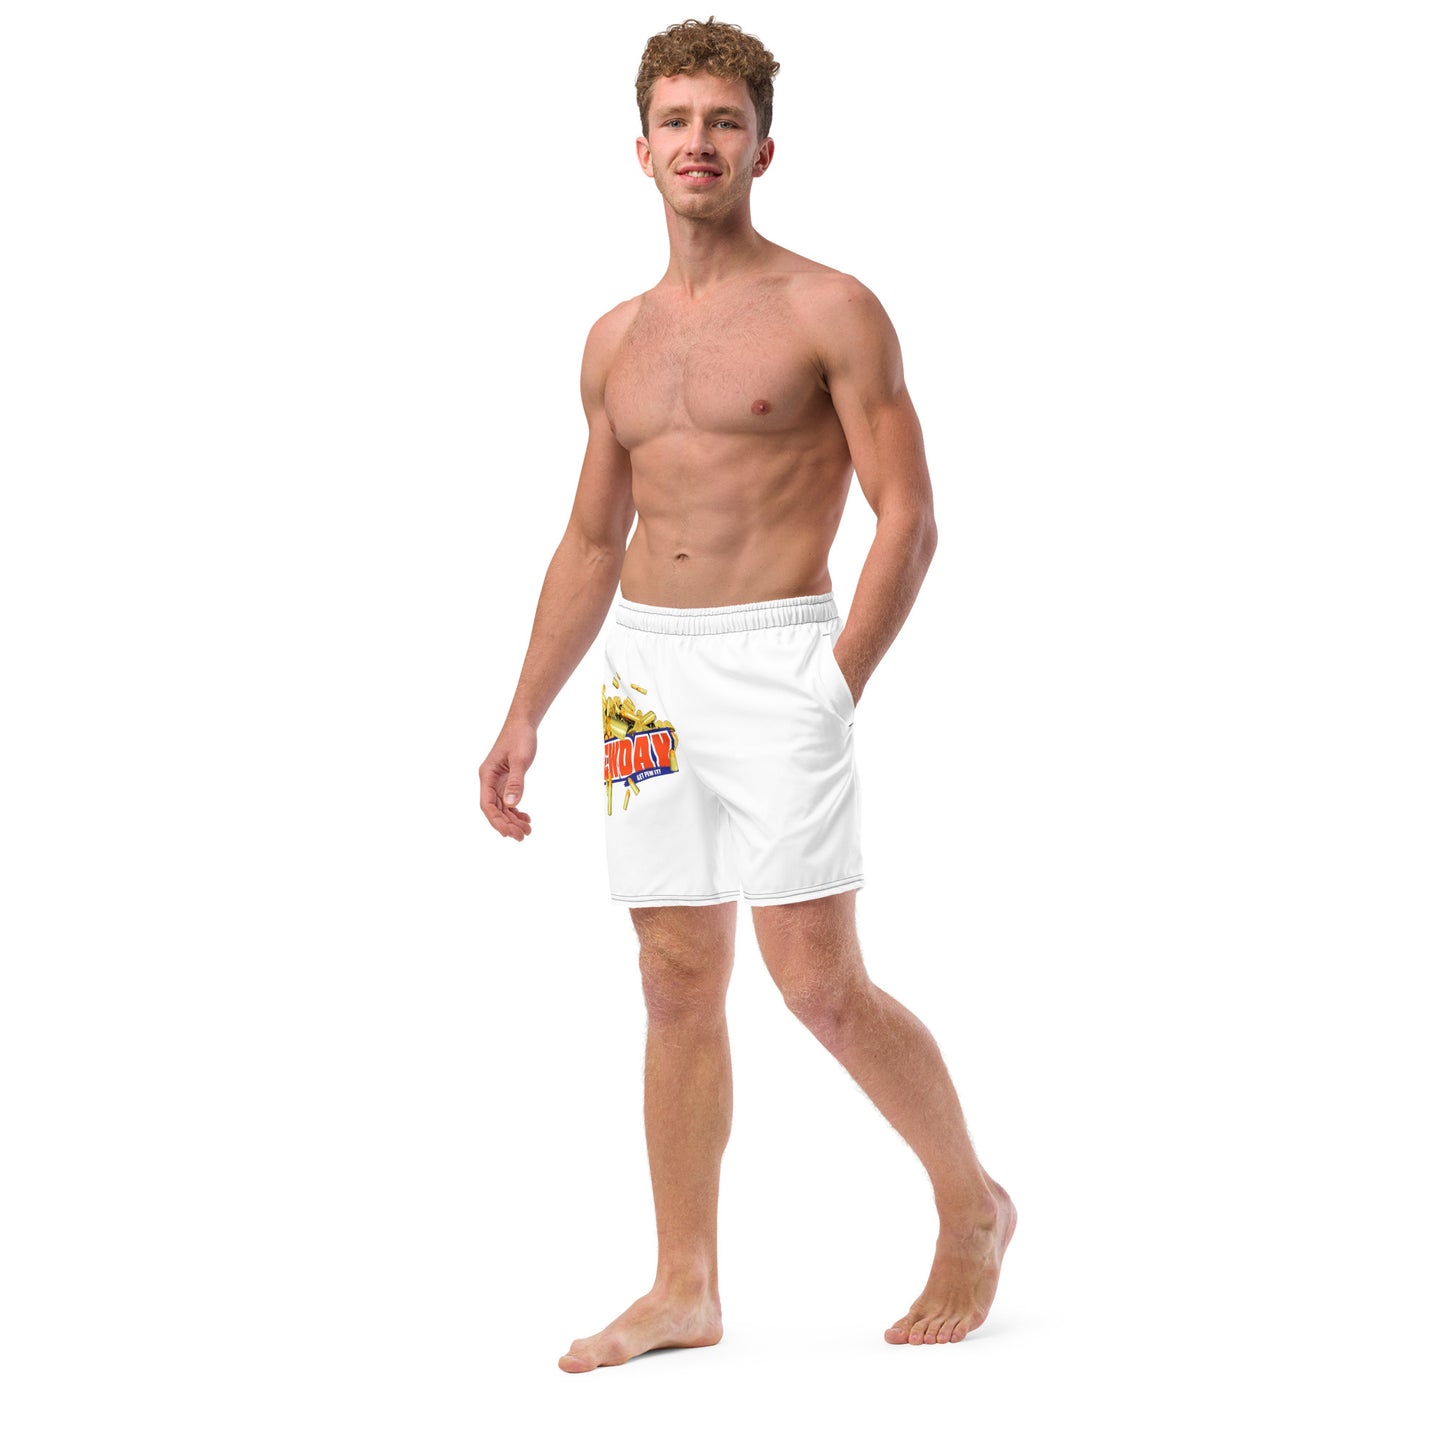 PEWDAY CANDY Men's swim trunks